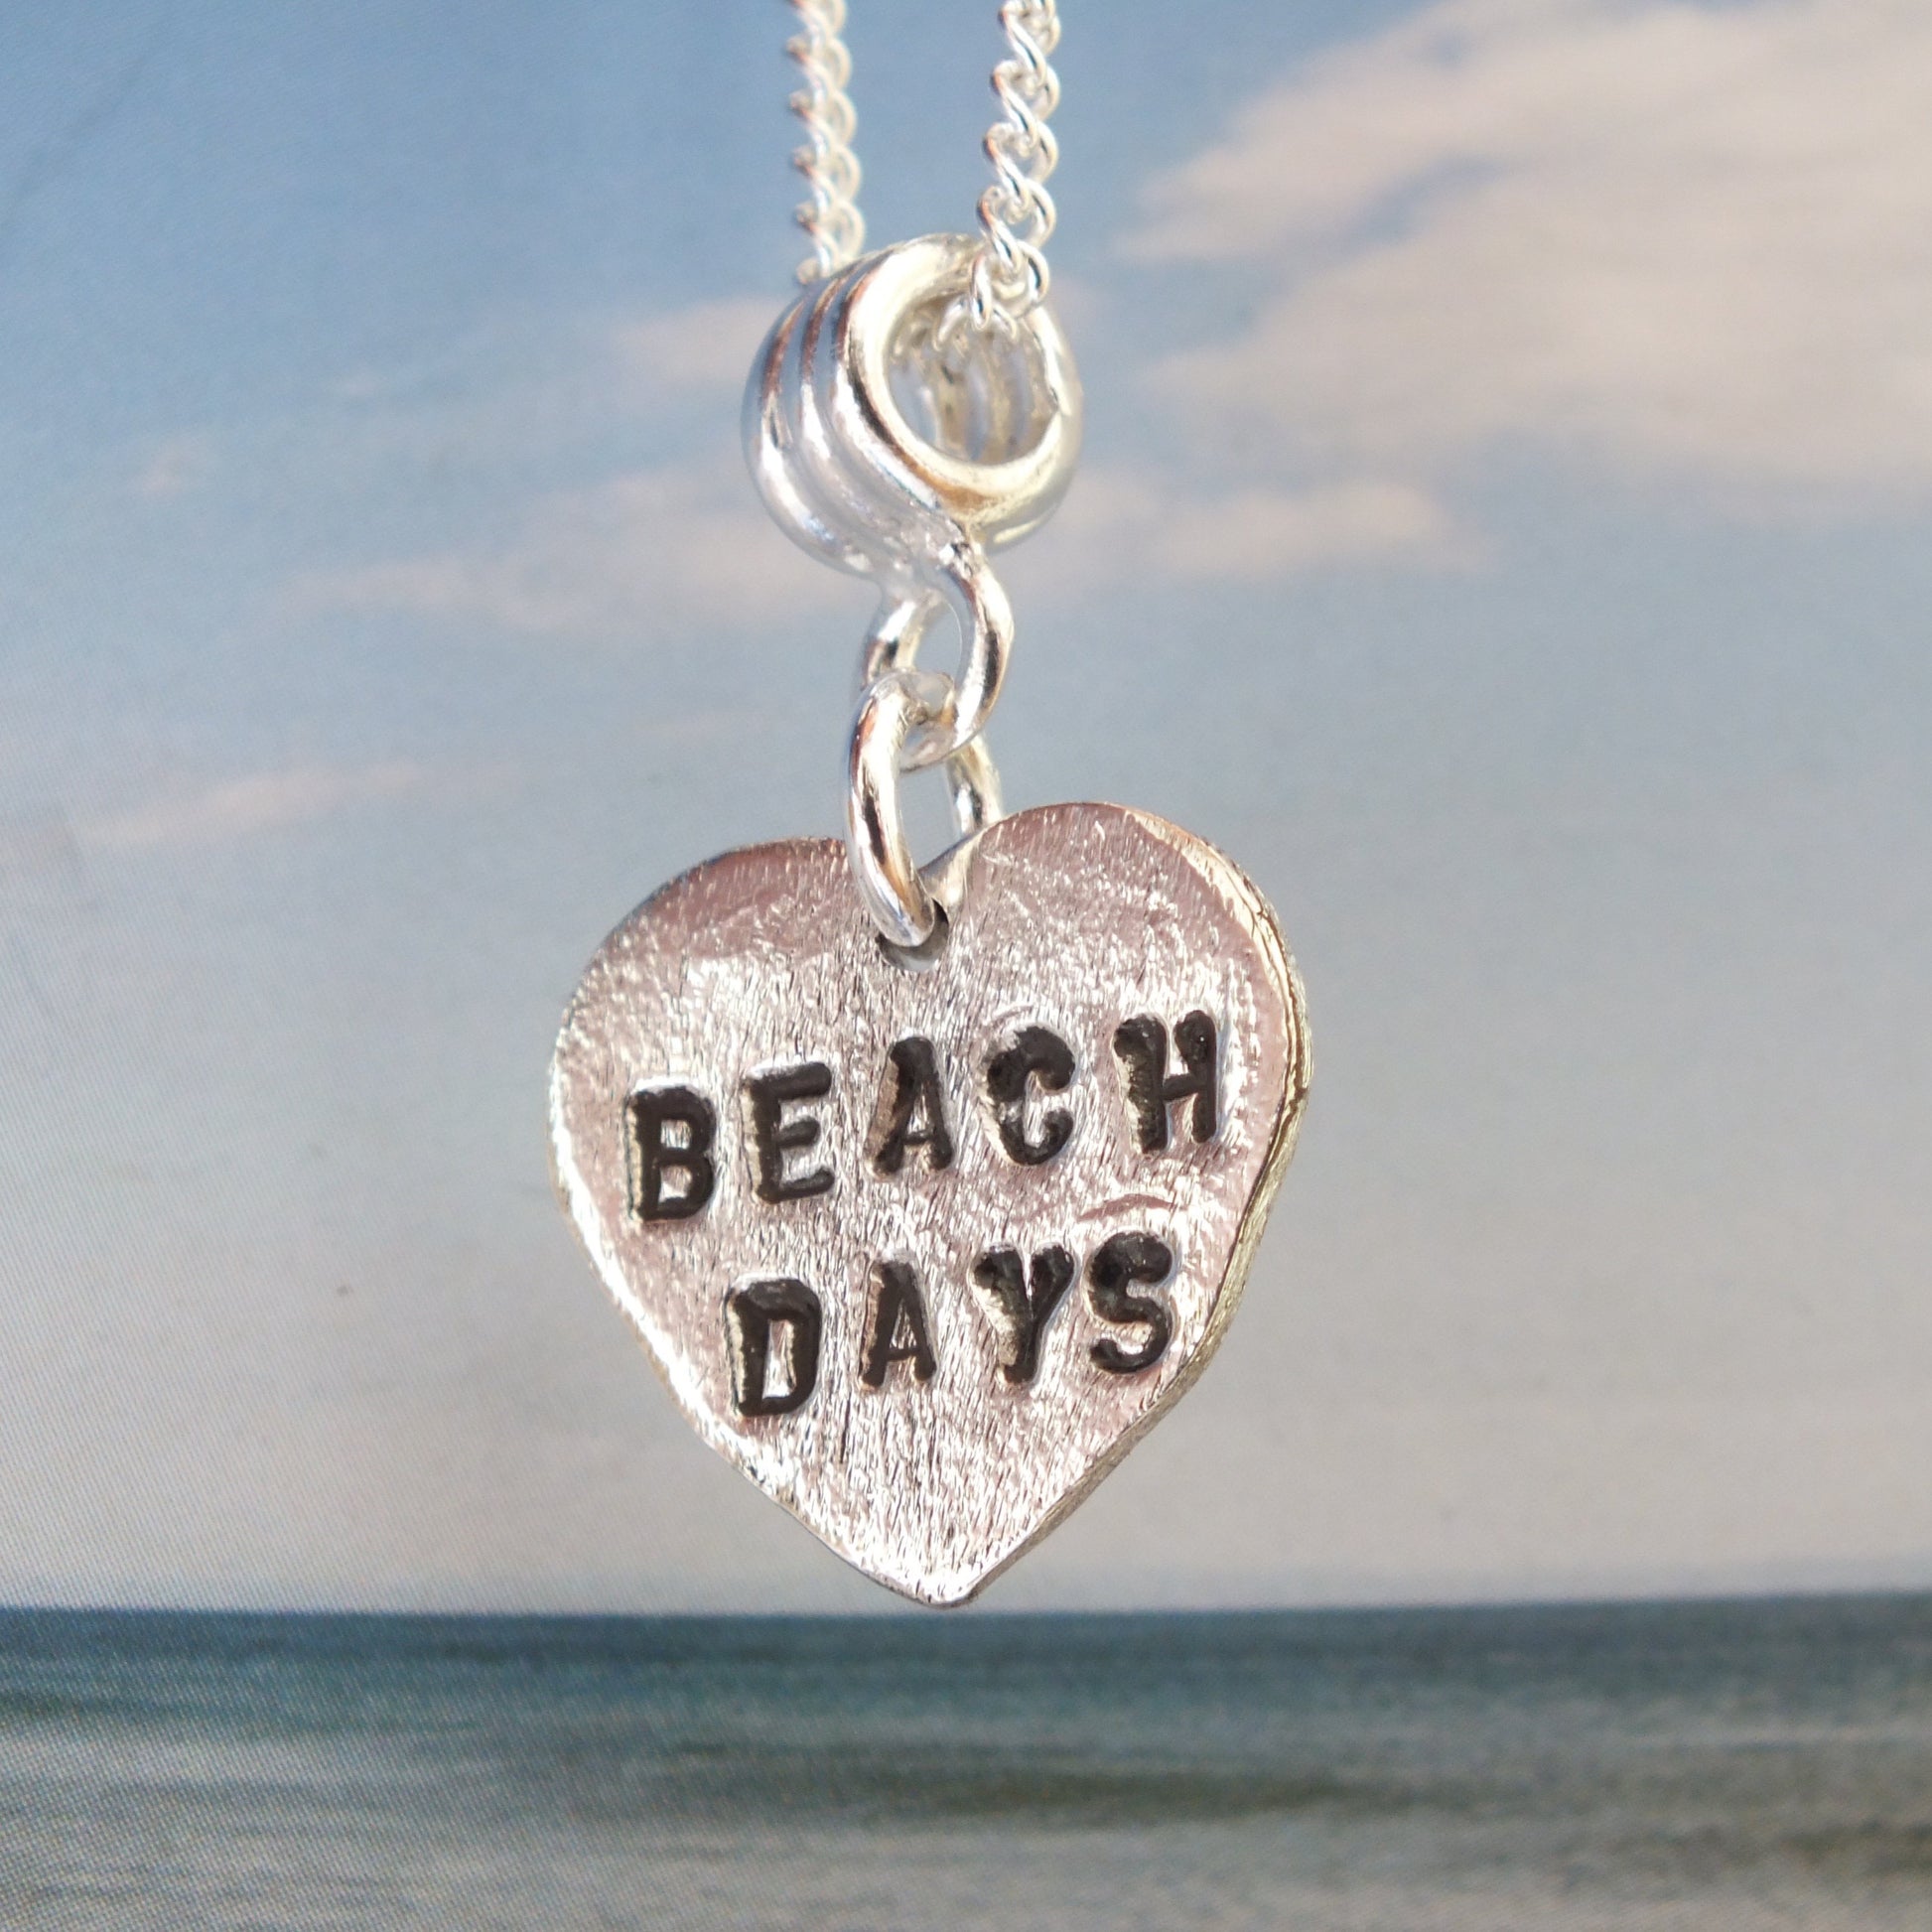 Beach days necklace